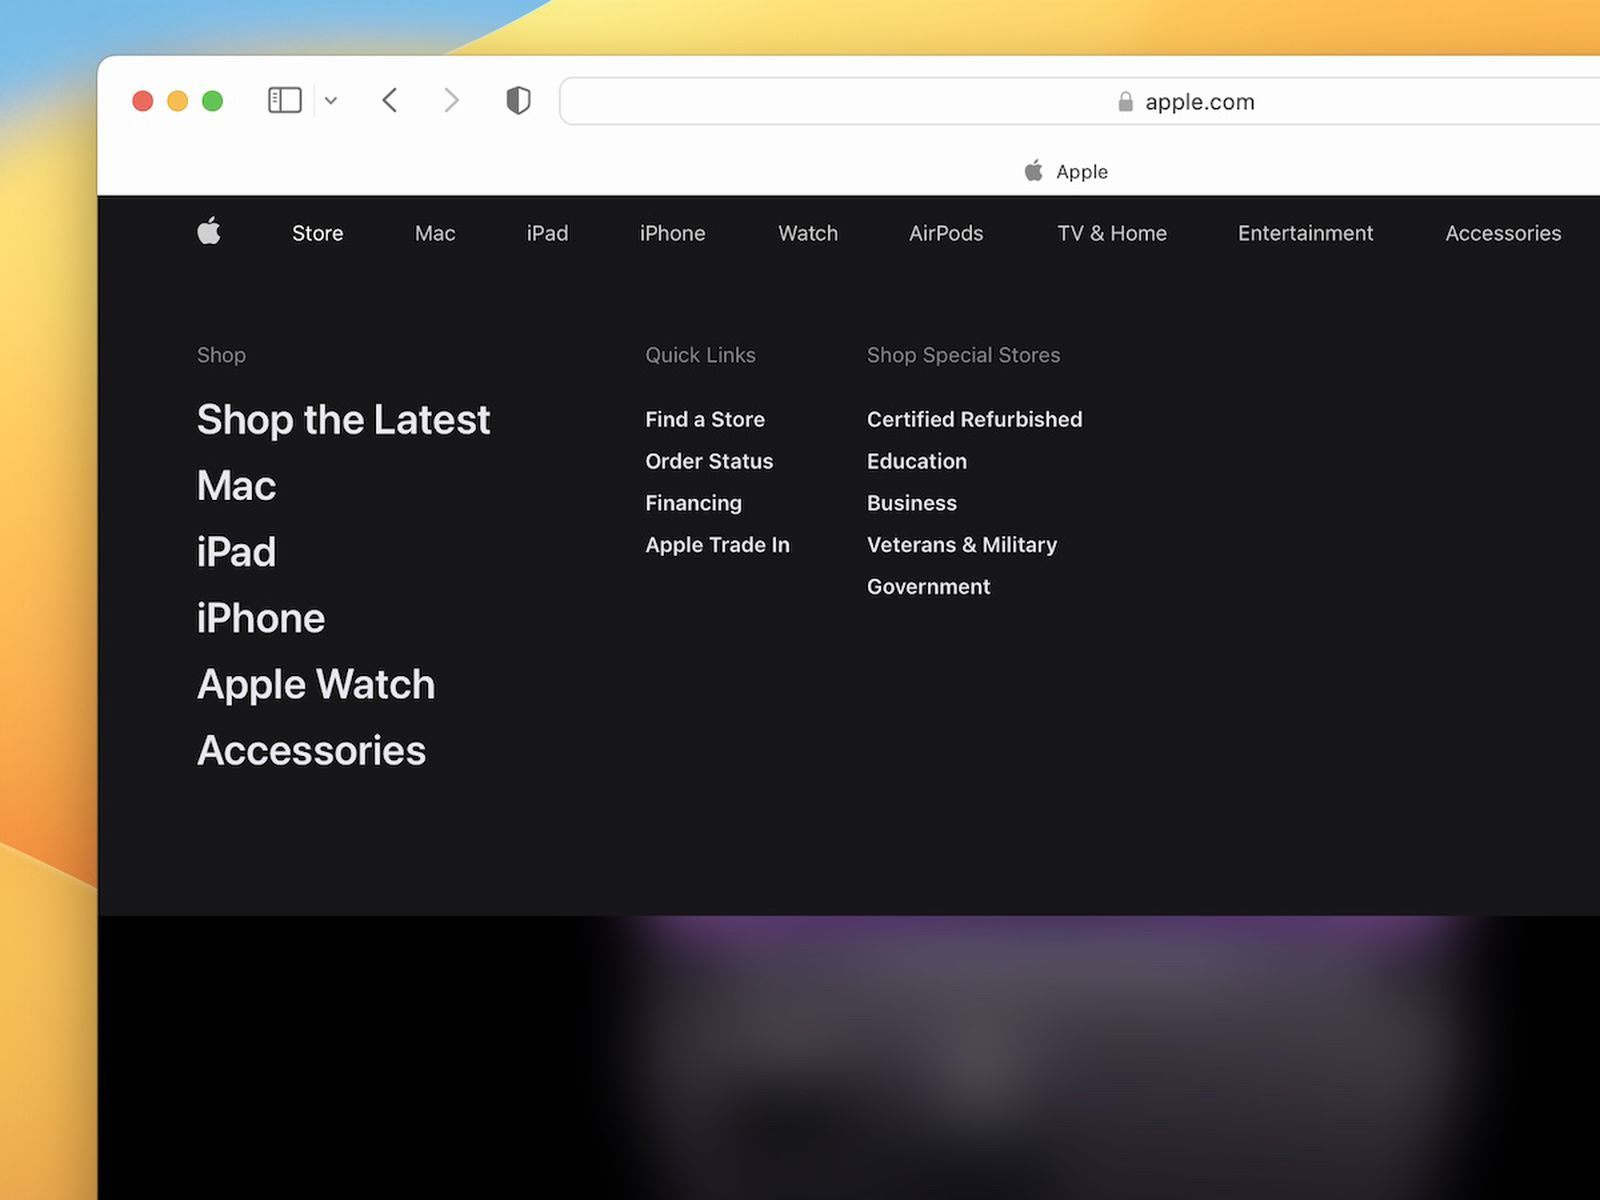 The drop-down menu navigation on the Apple website